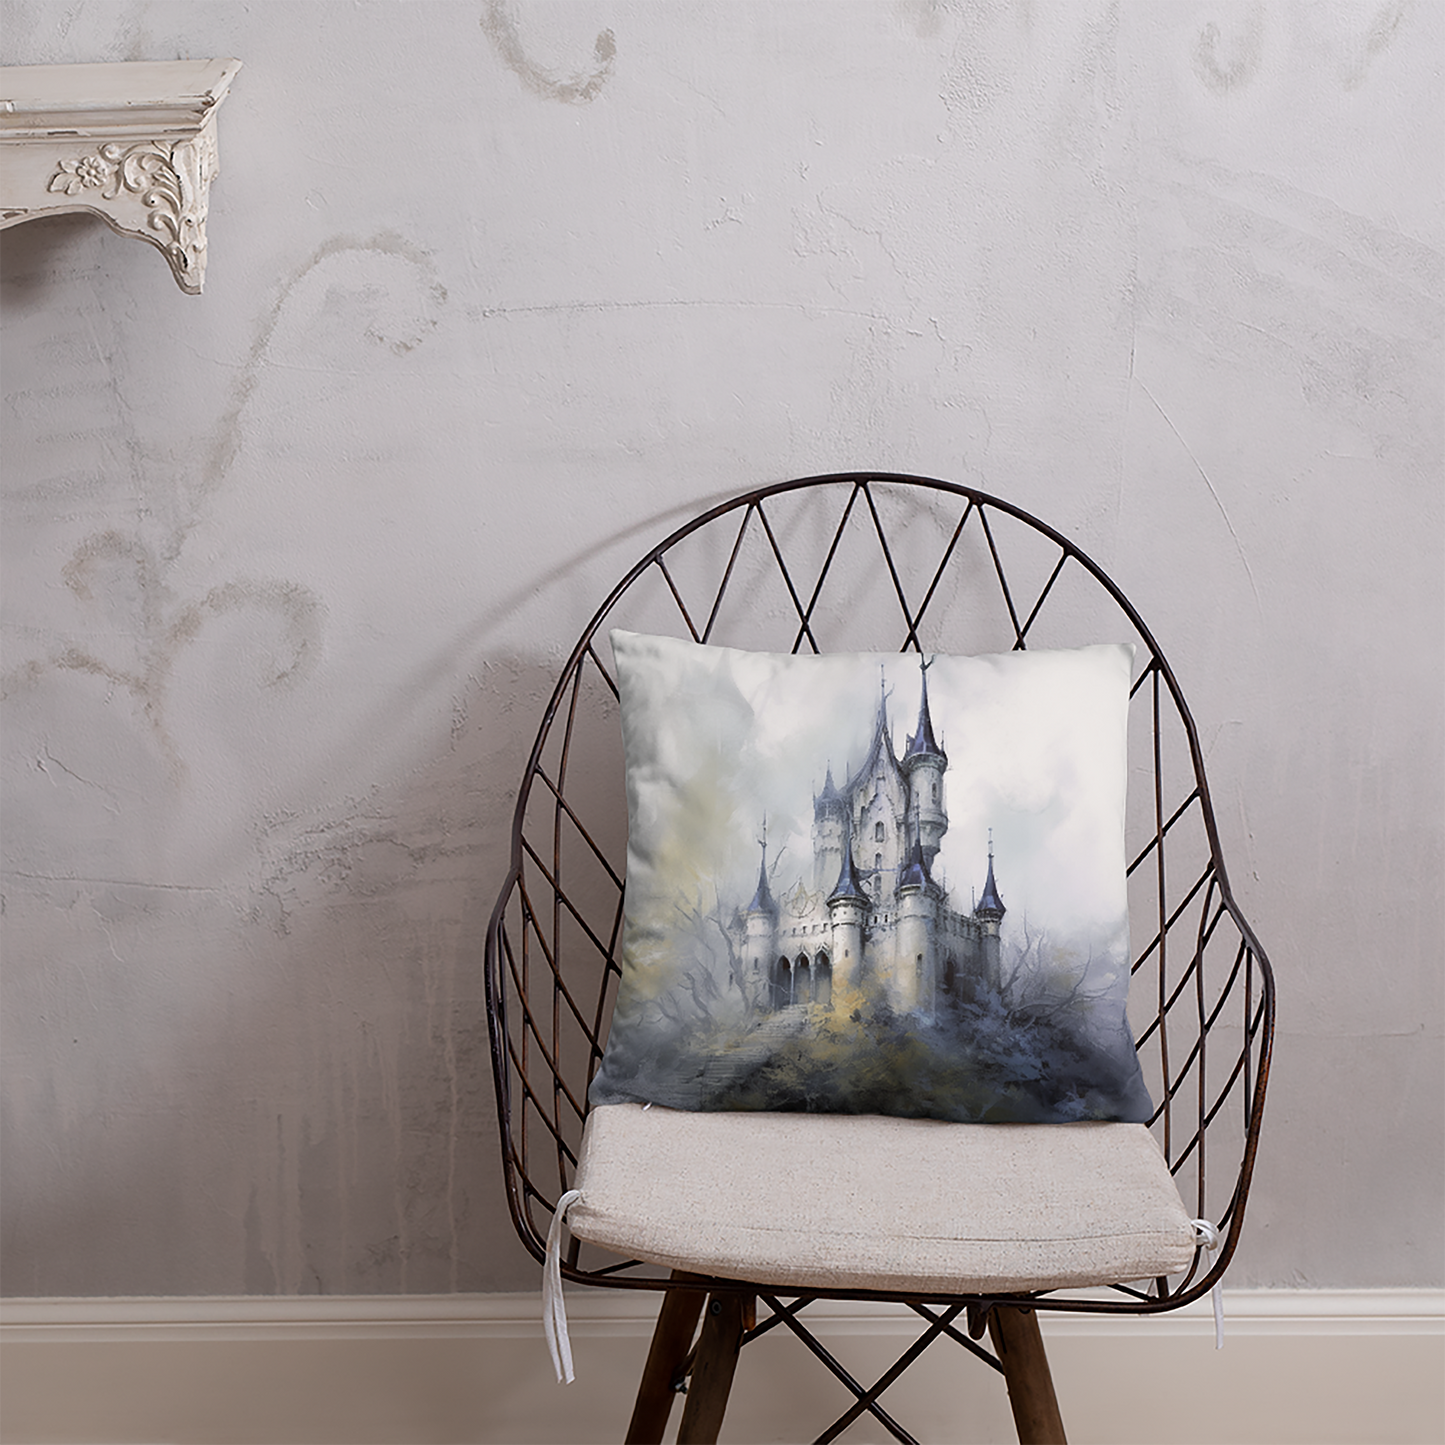 Castle Throw Pillow Watercolor Fantasy White Castle Polyester Decorative Cushion 18x18